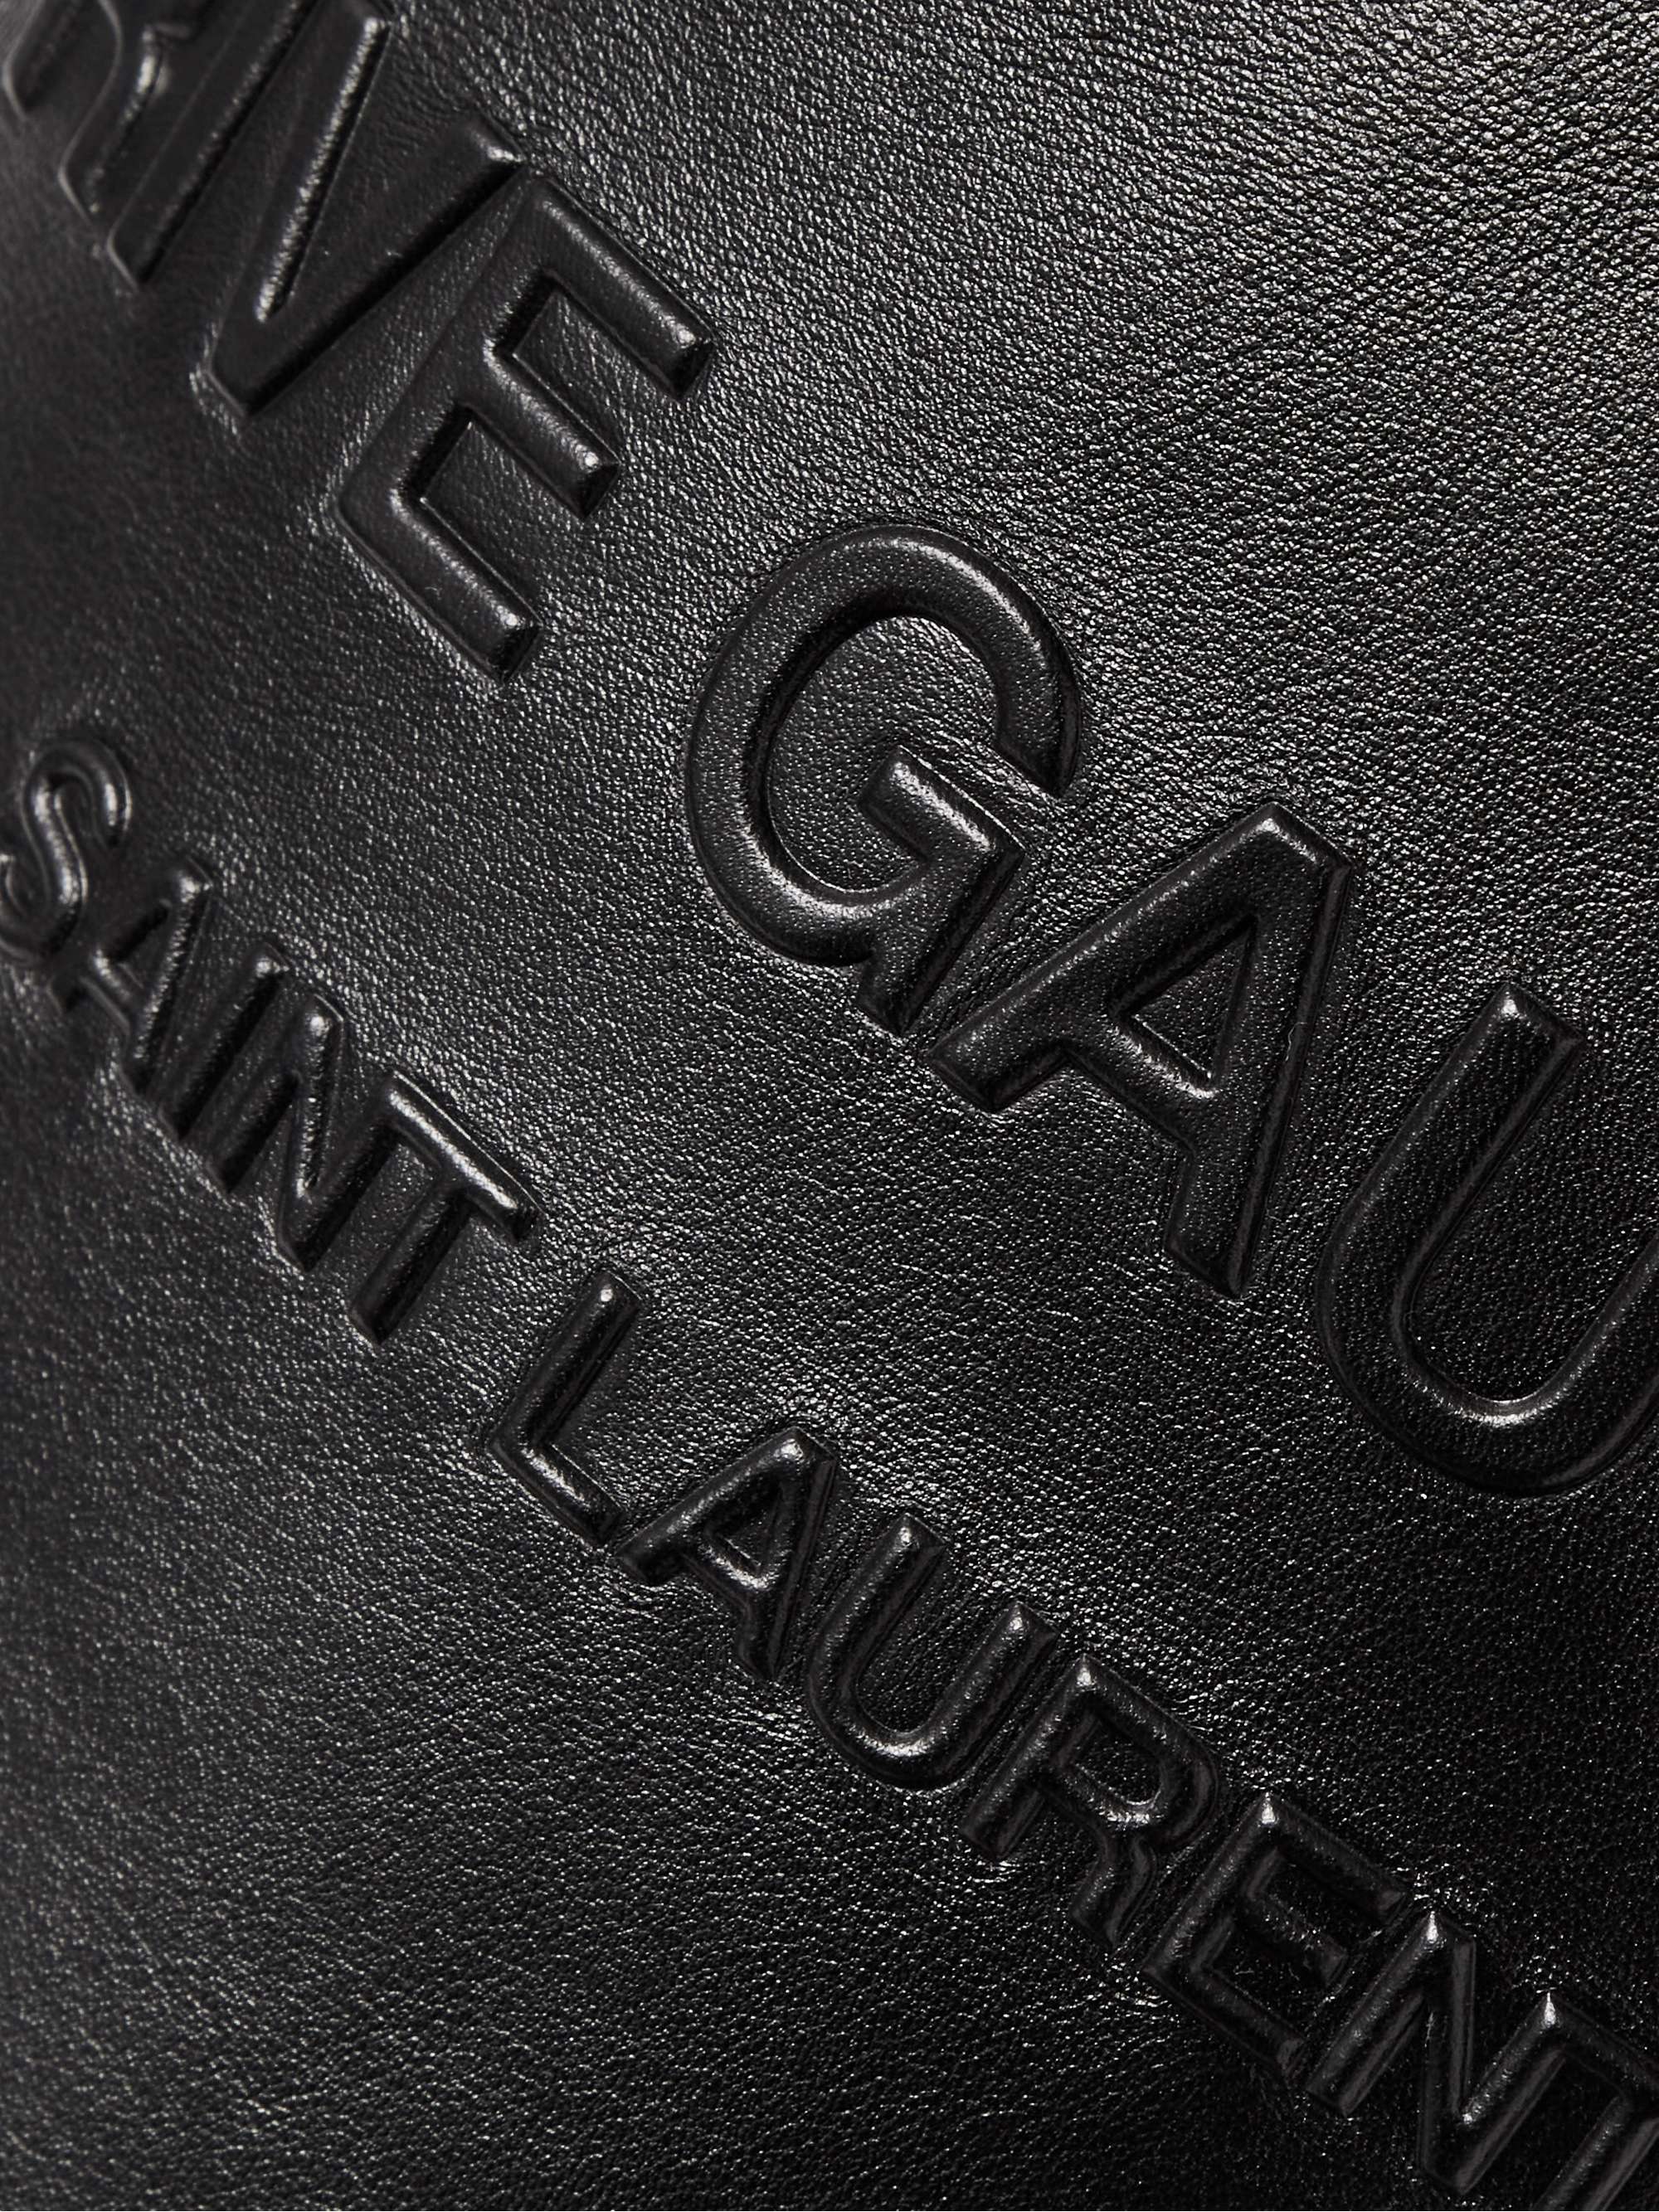 SAINT LAURENT Logo-Embossed Leather Tote Bag